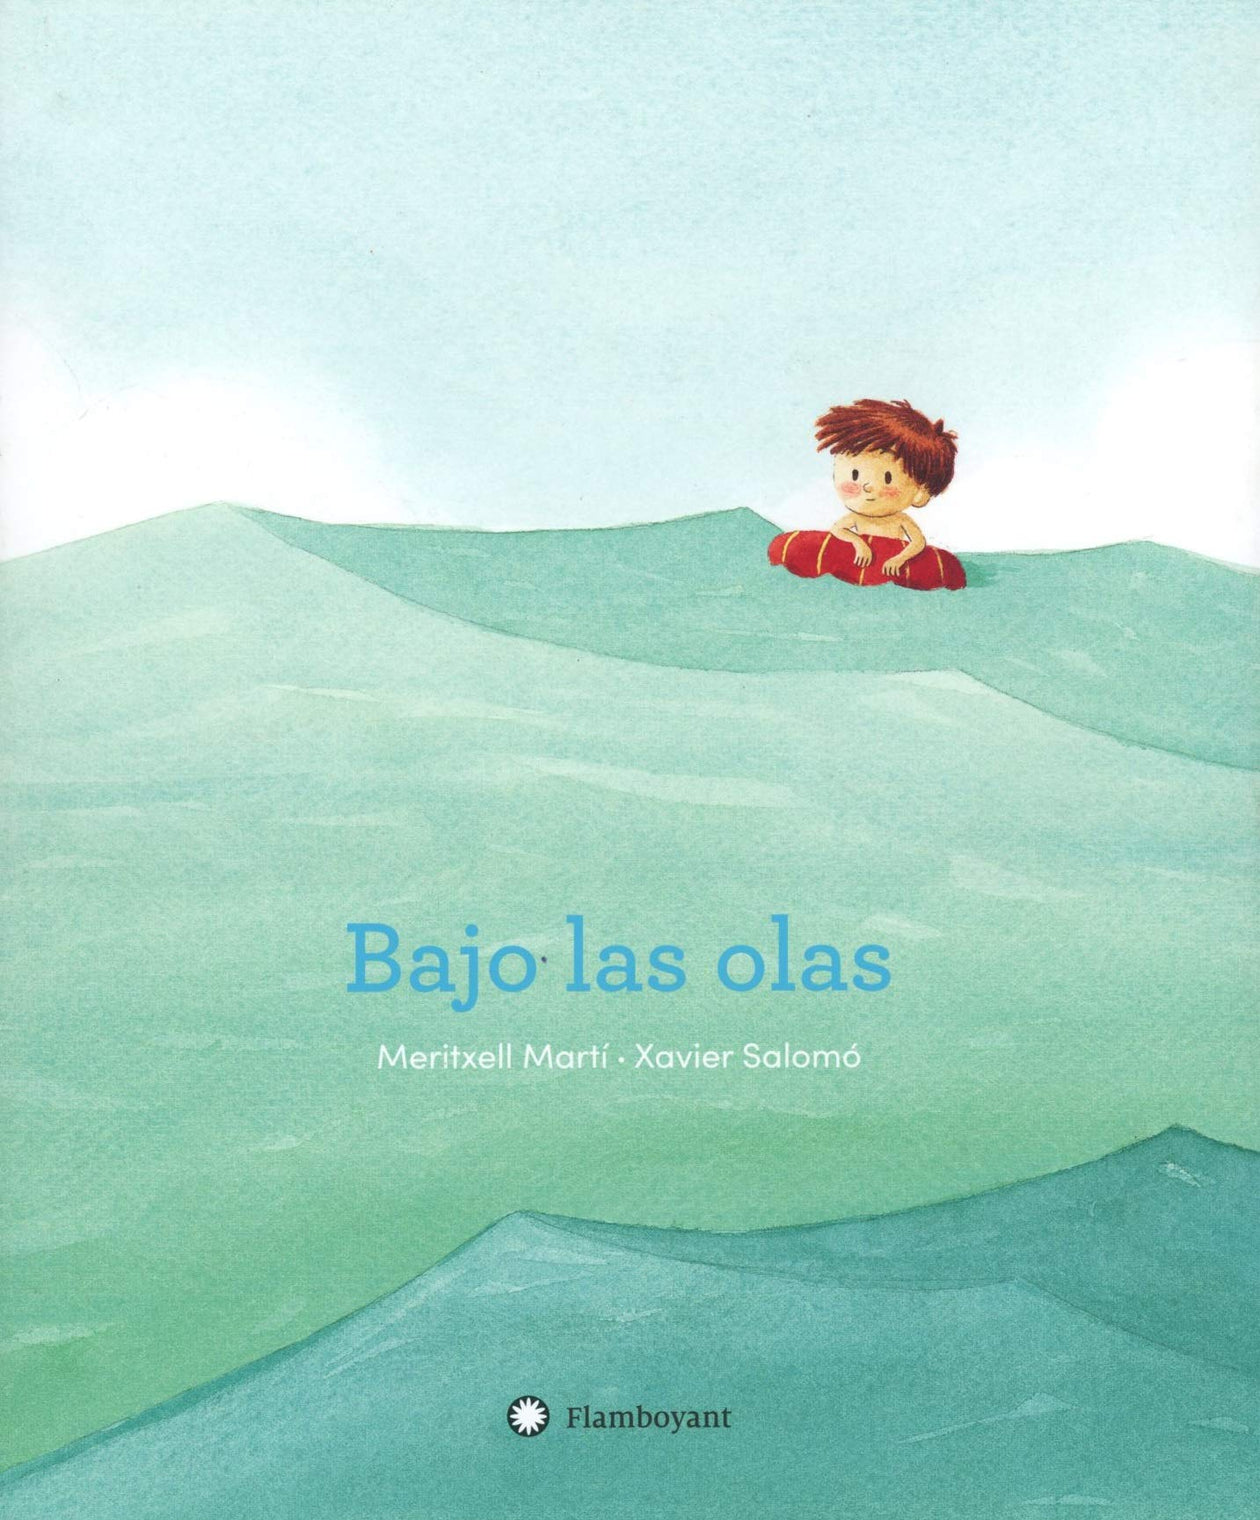 Meritxell Martí: Bajo las olas, illustrated by Xavier Salomo